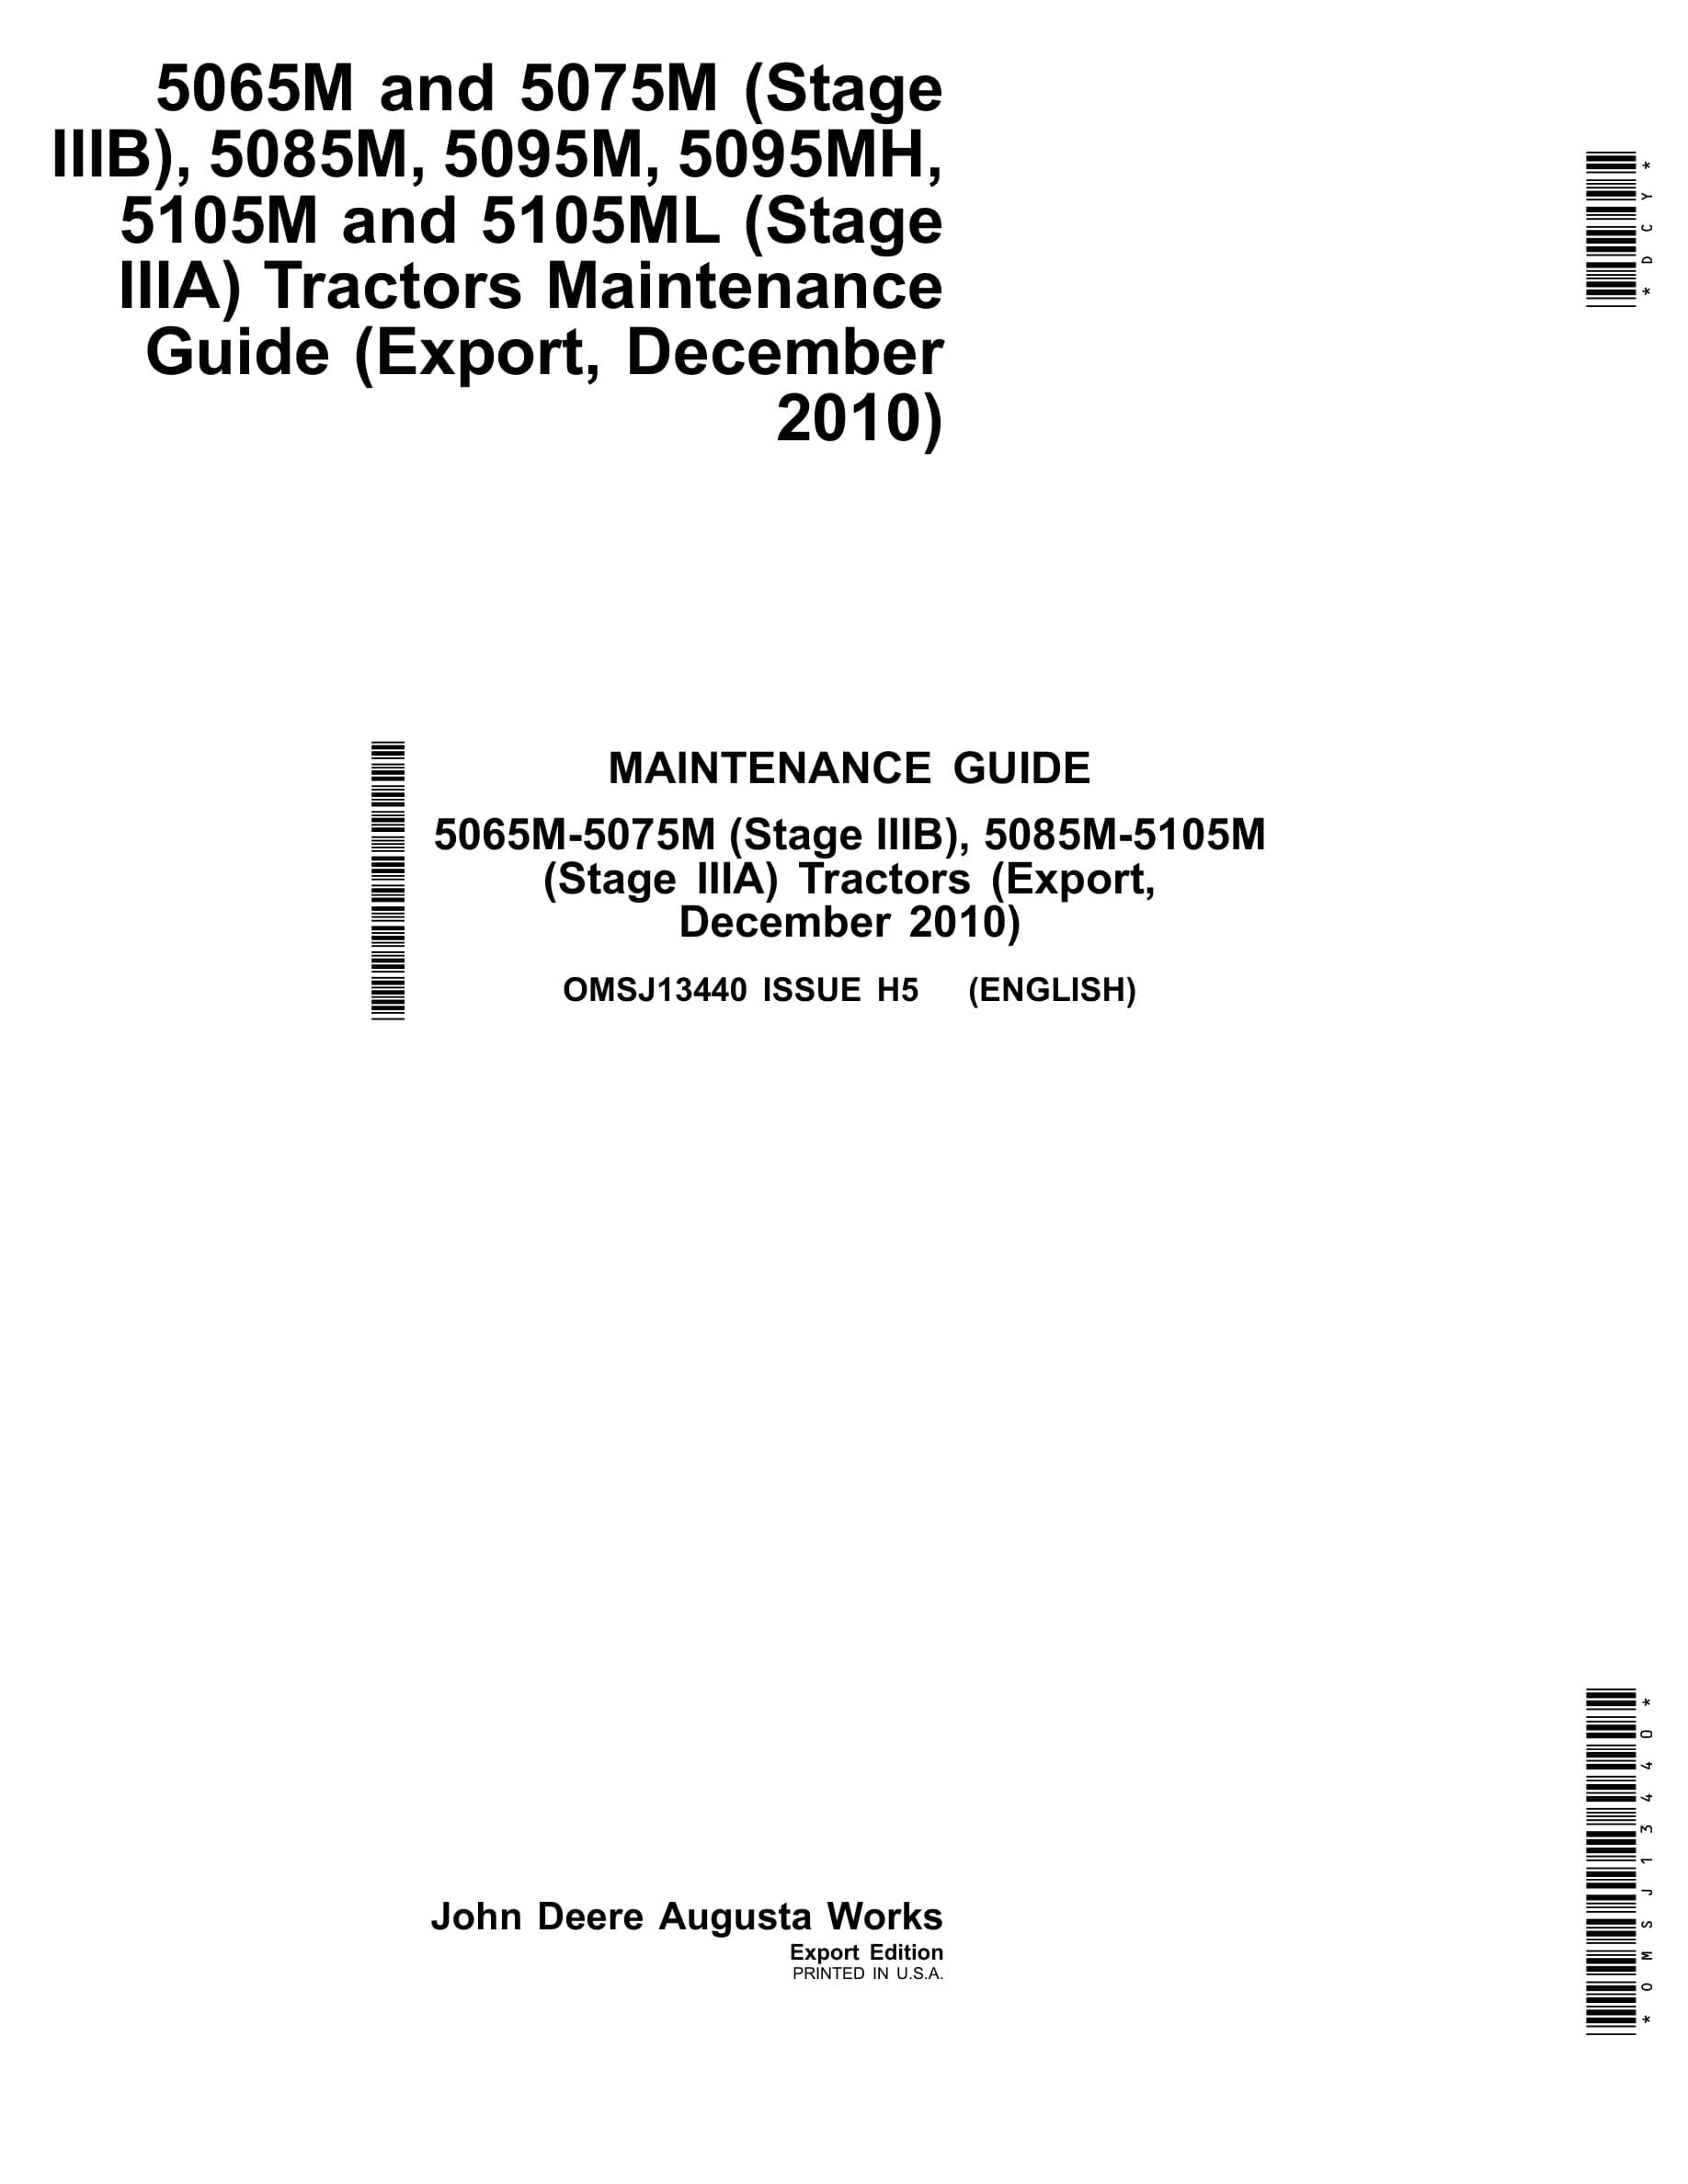 John Deere 5065m-5075m (stage Iiib), 5085m-5105m (stage Iiia) Tractors Operator Manuals OMSJ13440-1